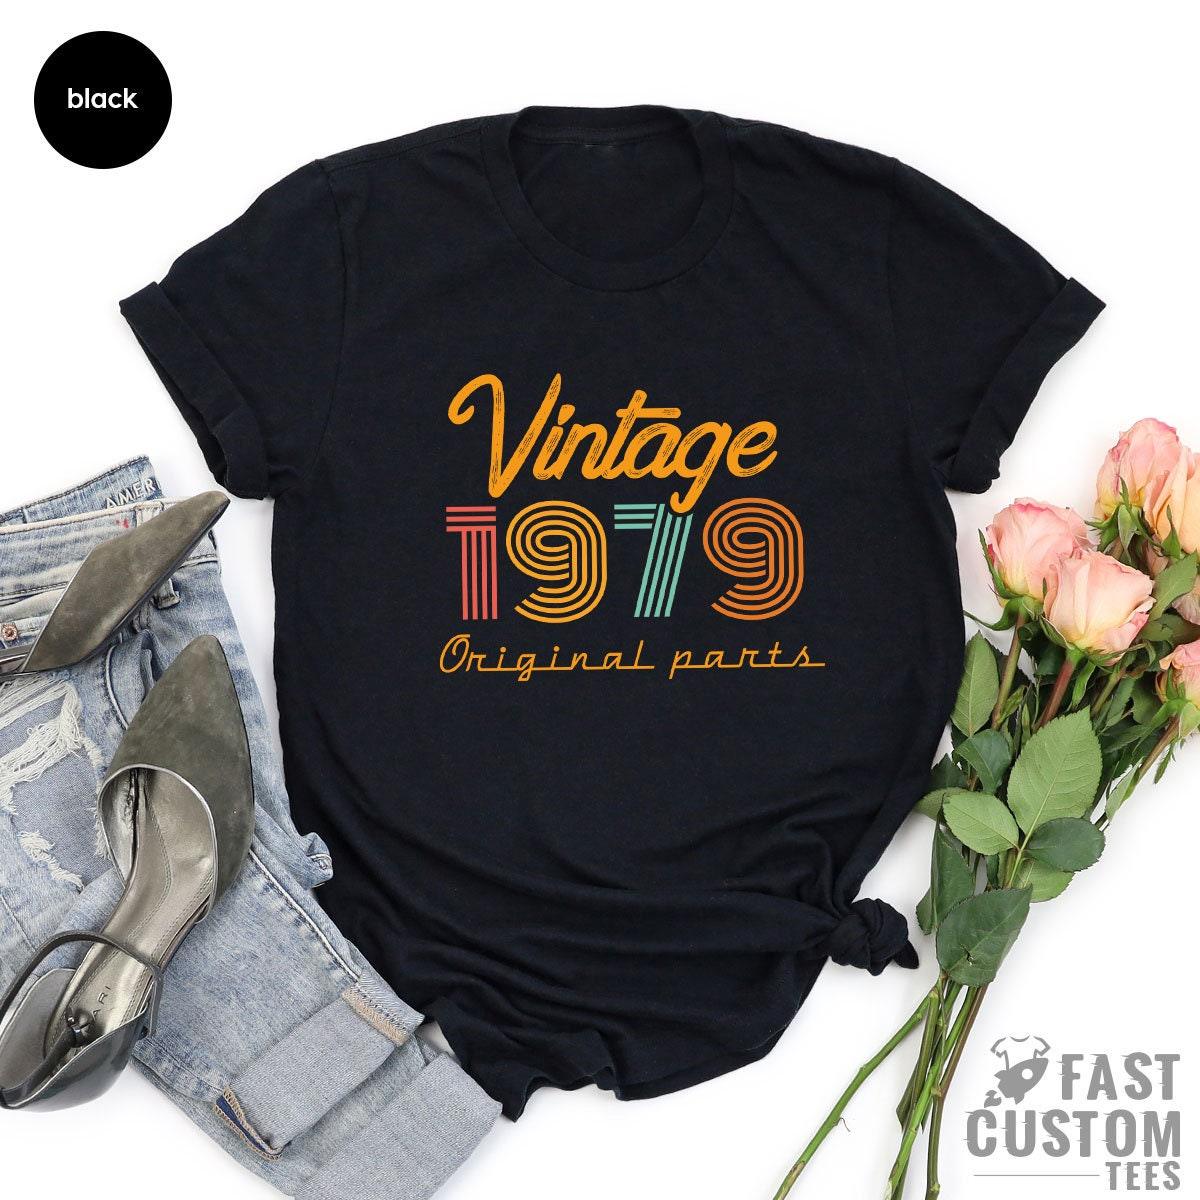 42nd Birthday Shirt, Vintage T Shirt, Vintage 1979 Shirt, 42nd Birthday Gift For Women, 42nd Birthday Shirt Men, Retro Shirt, Vintage Shirts - Fastdeliverytees.com